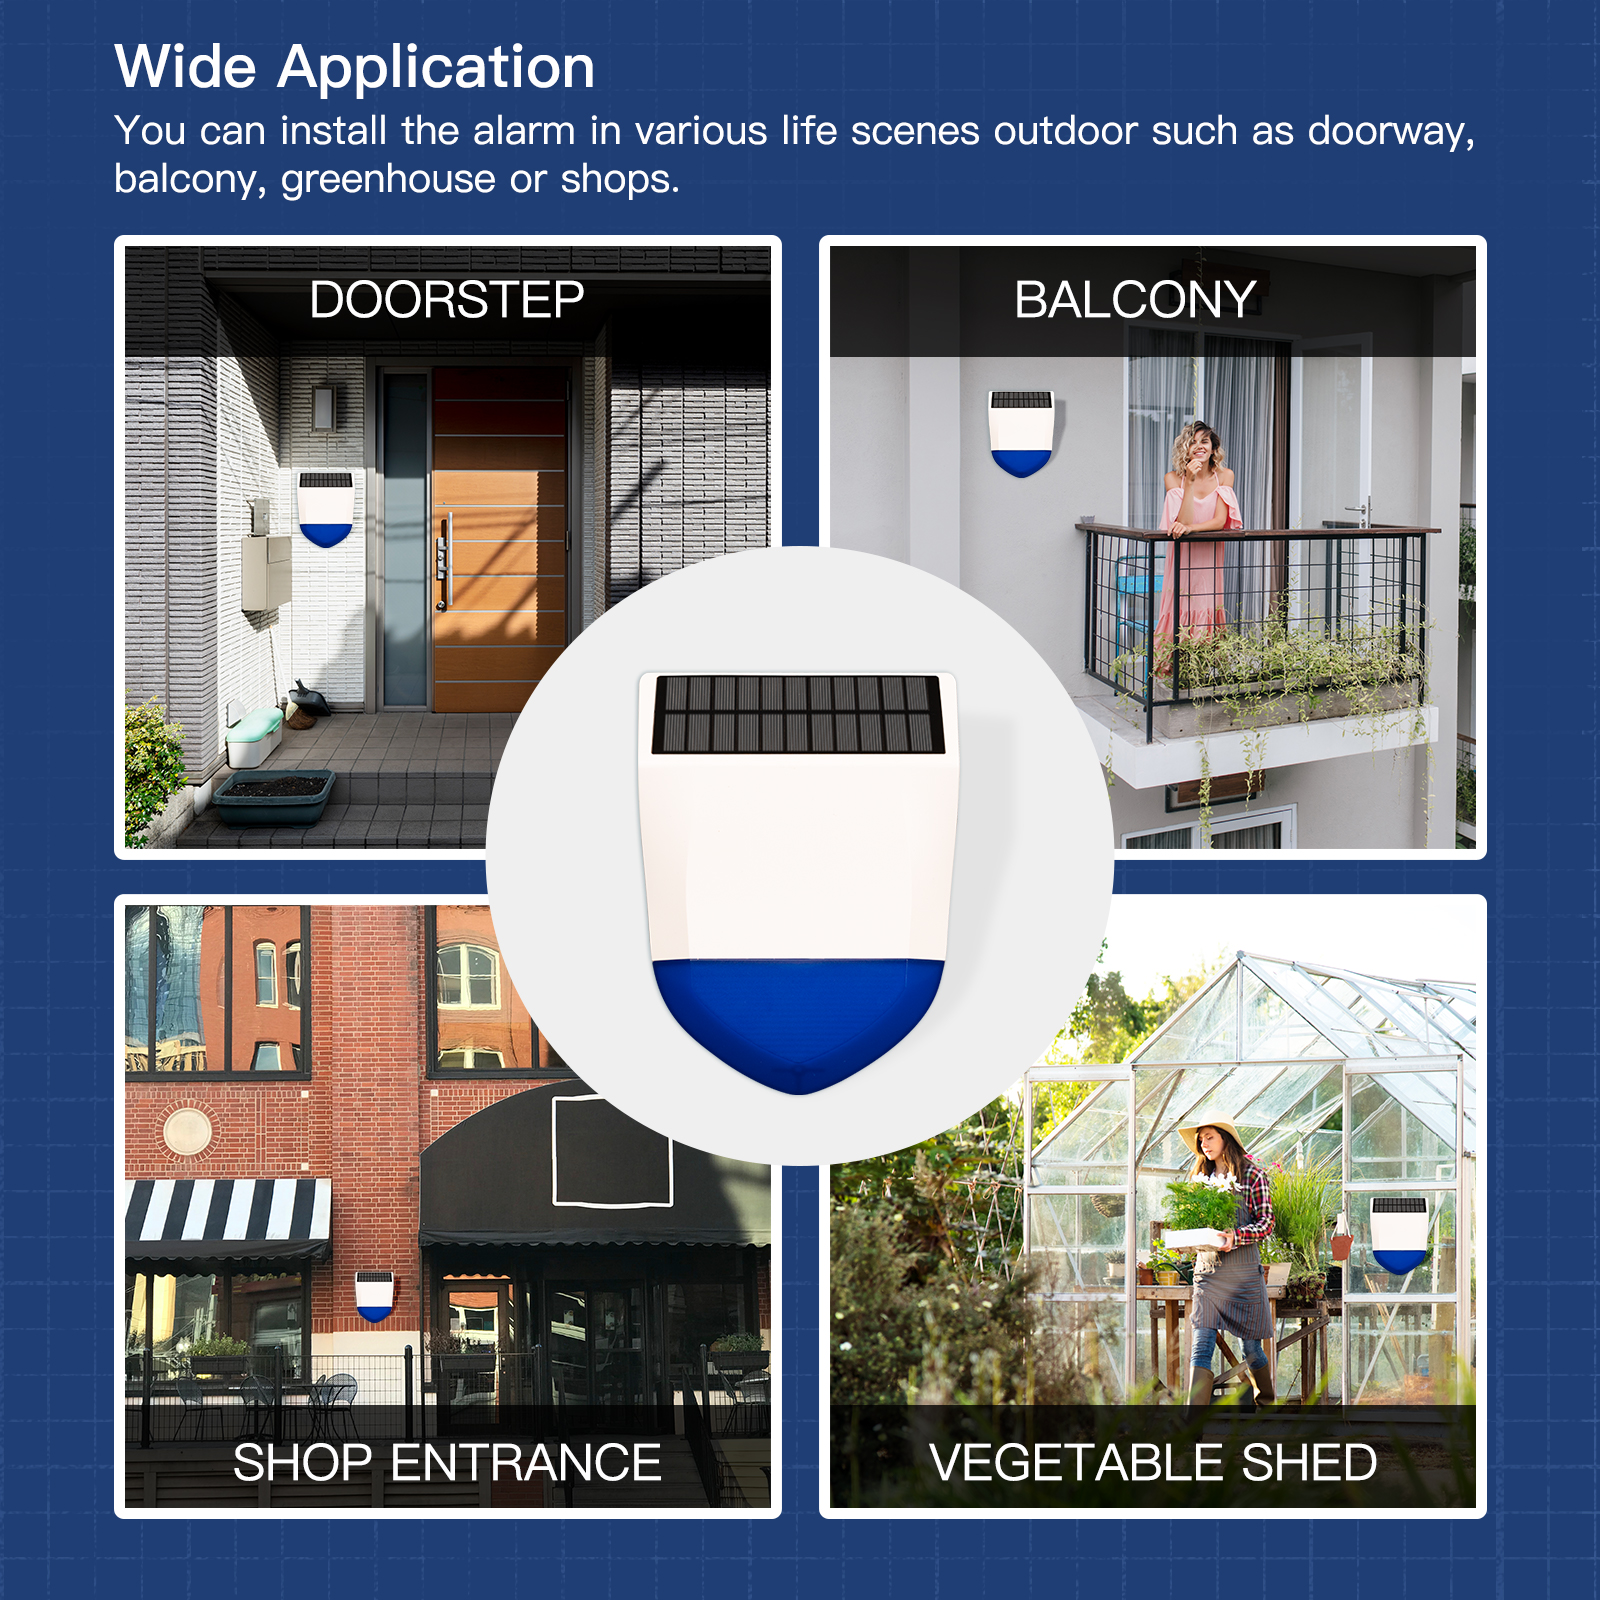 Tuya Wifi/ZigBe  Smart Siren Alarm Waterproof Outdoor With Solar  with Solar Charging Panel 95dB Remote Control Outdoor Siren Alarm